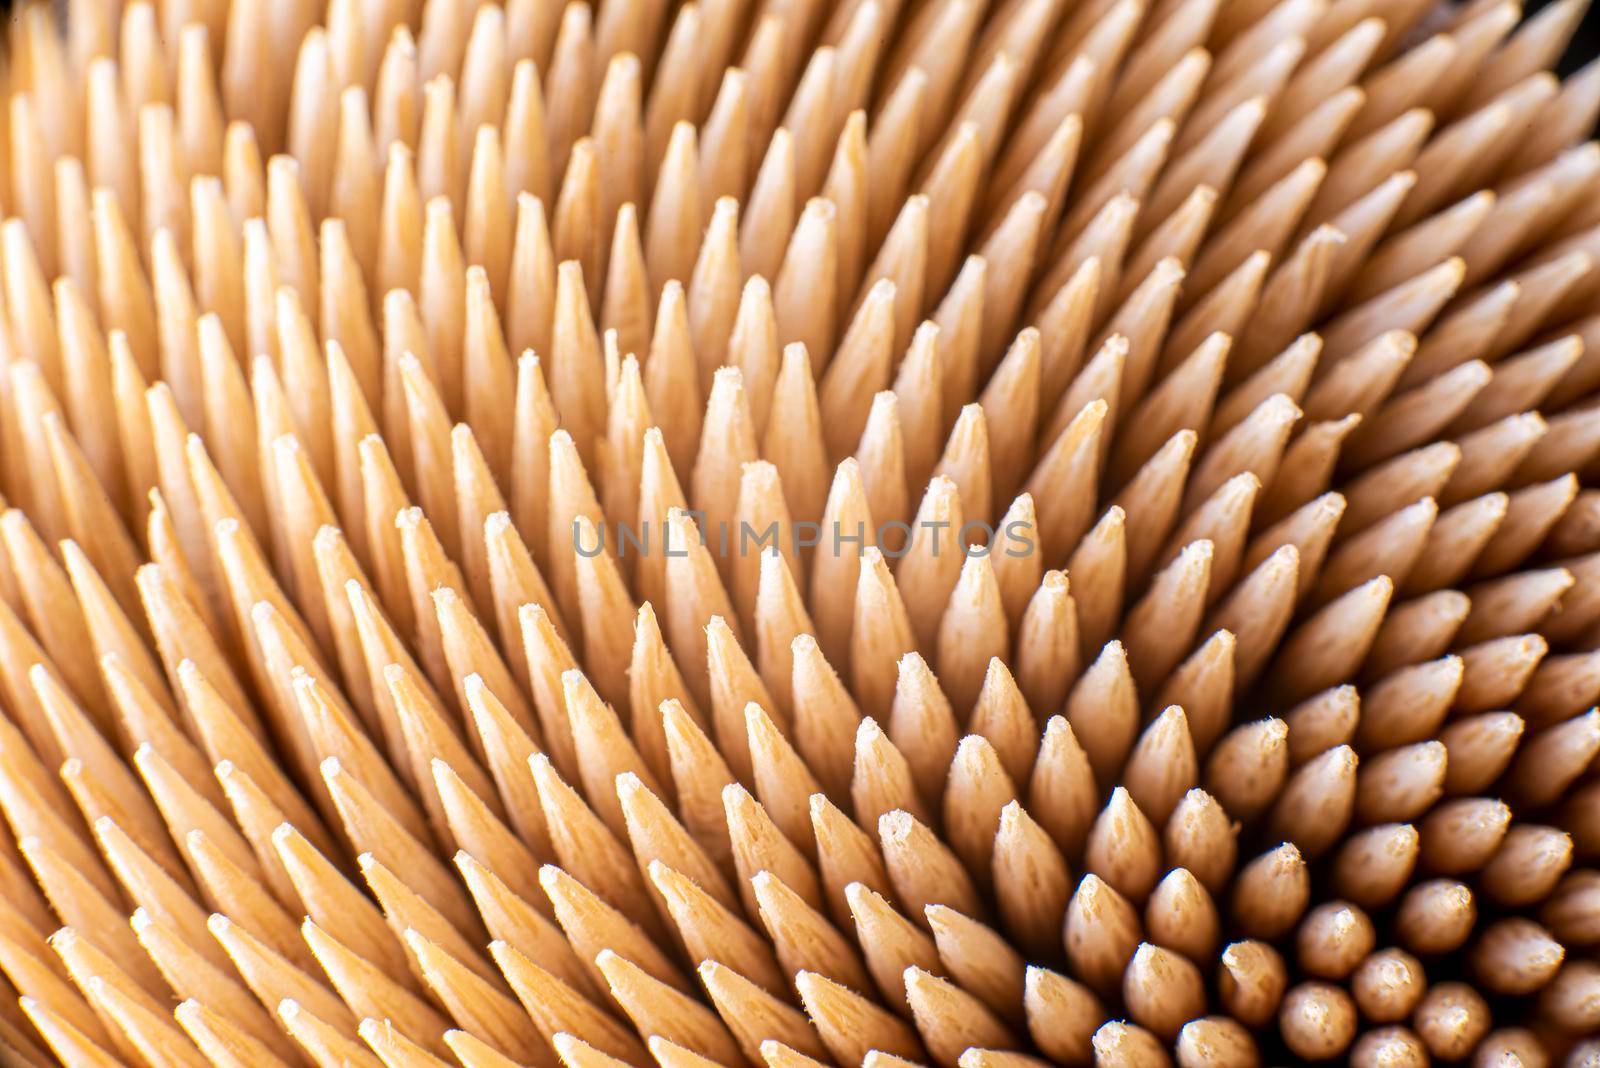 Toothpick sticks from top view macro shot by avirozen